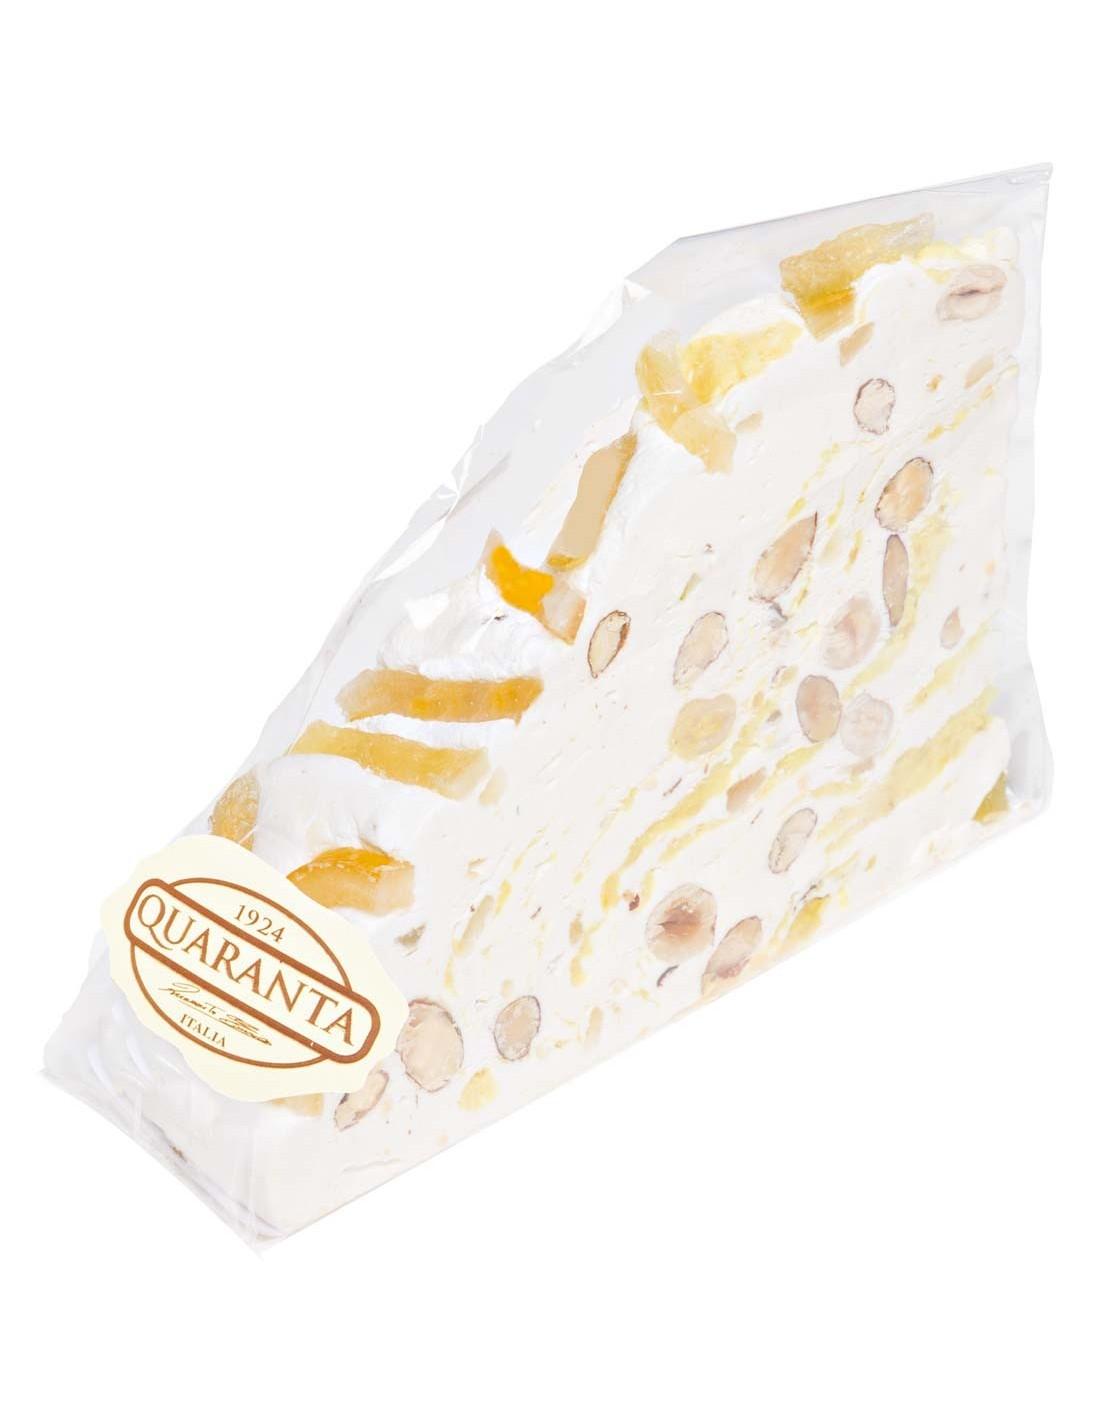 Quaranta Soft Torrone Cake Slice - Lemon - Torrone Candy